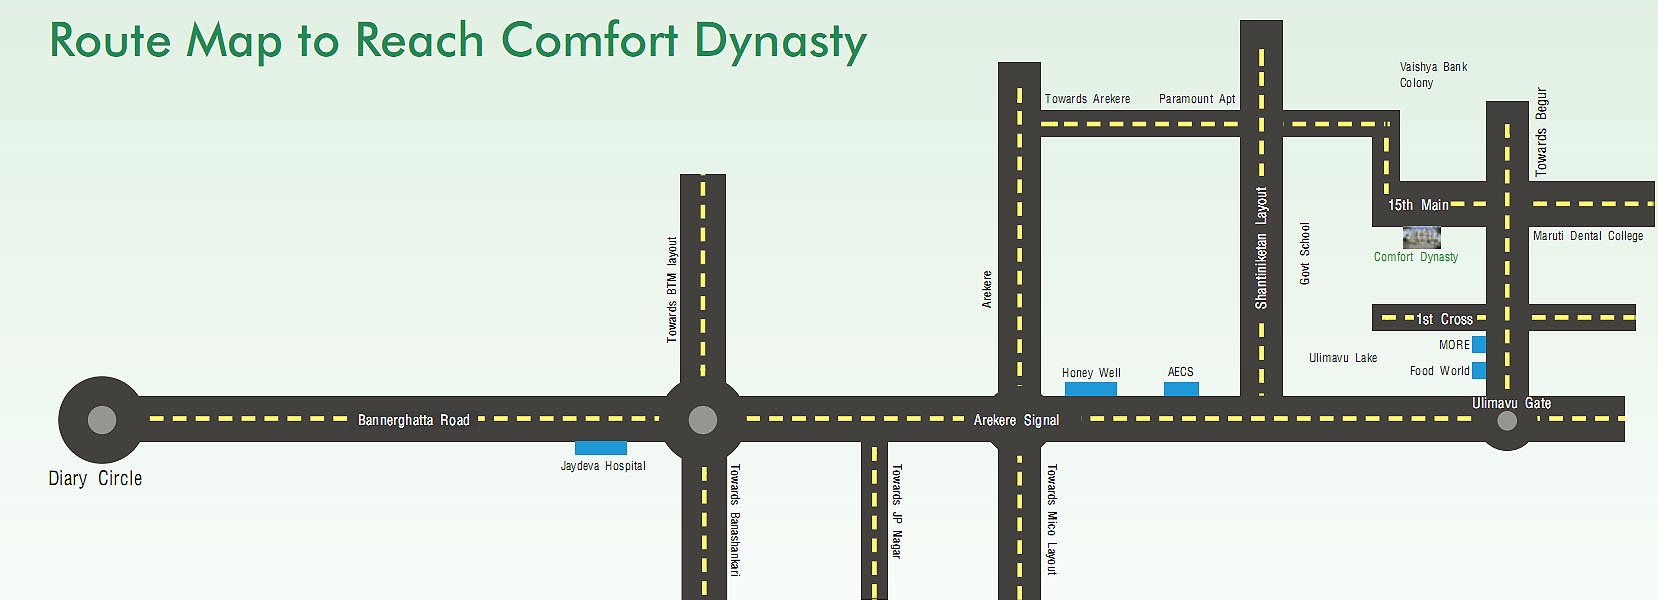 Comfort Dynasty Location Map